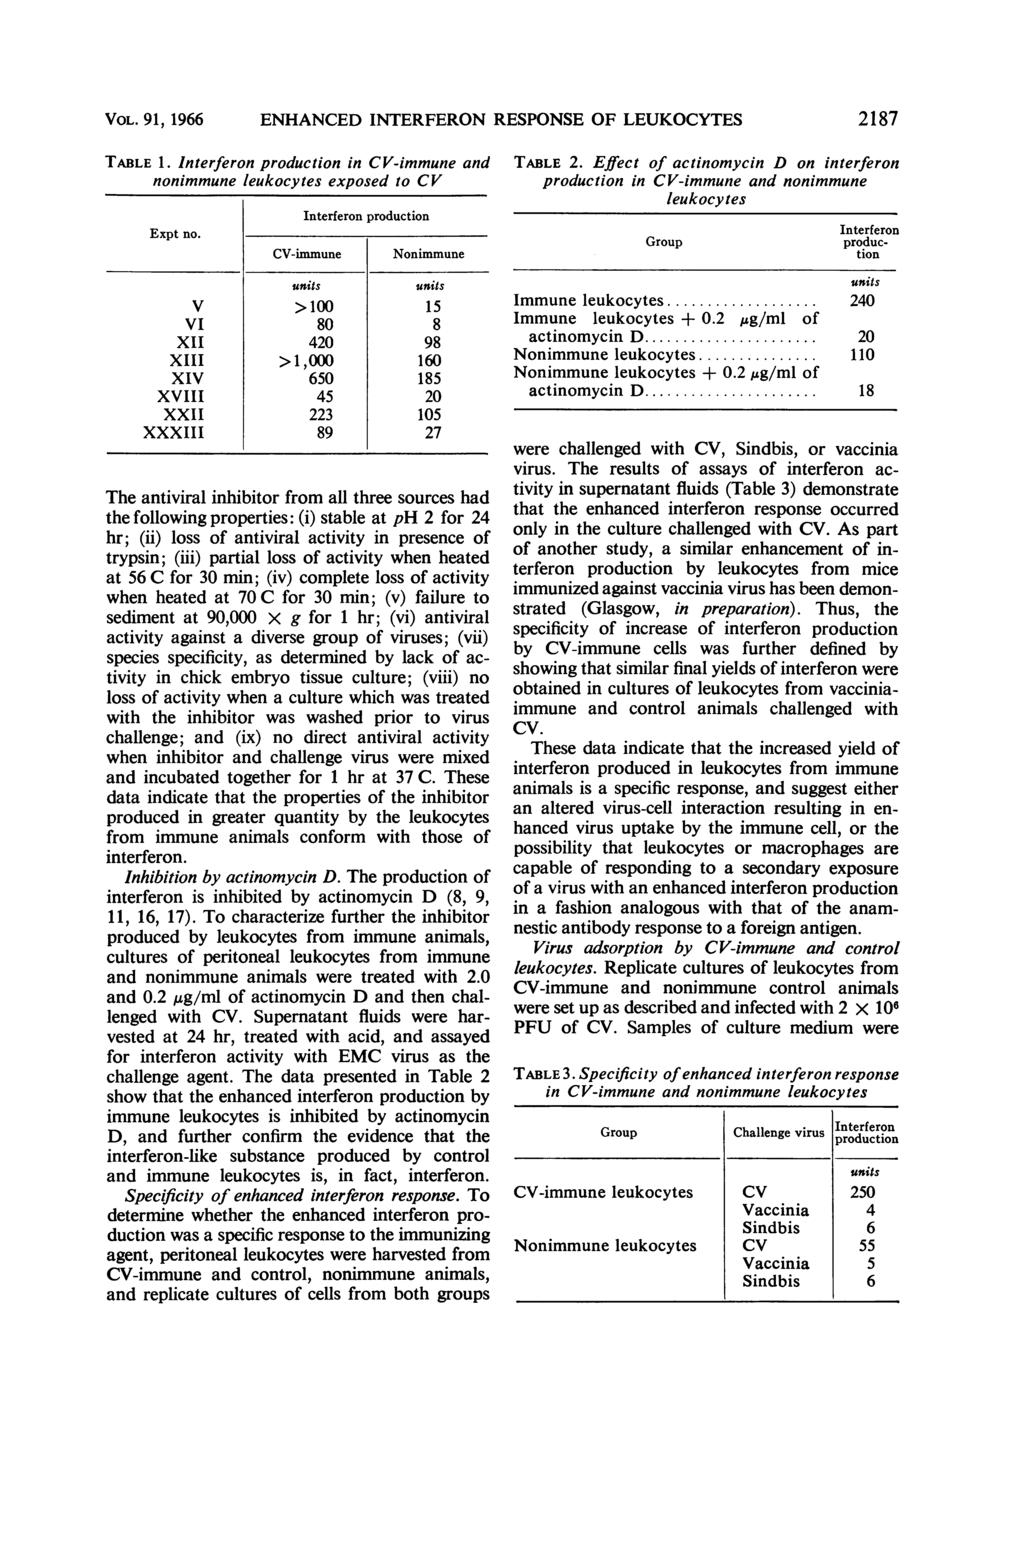 VOL. 91, 1966 ENHANCED INTERFERON RESPONSE OF 2187 TABLE 1. Interferon production in CV-immune and nonimmune leukocytes exposed to CV Expt no.